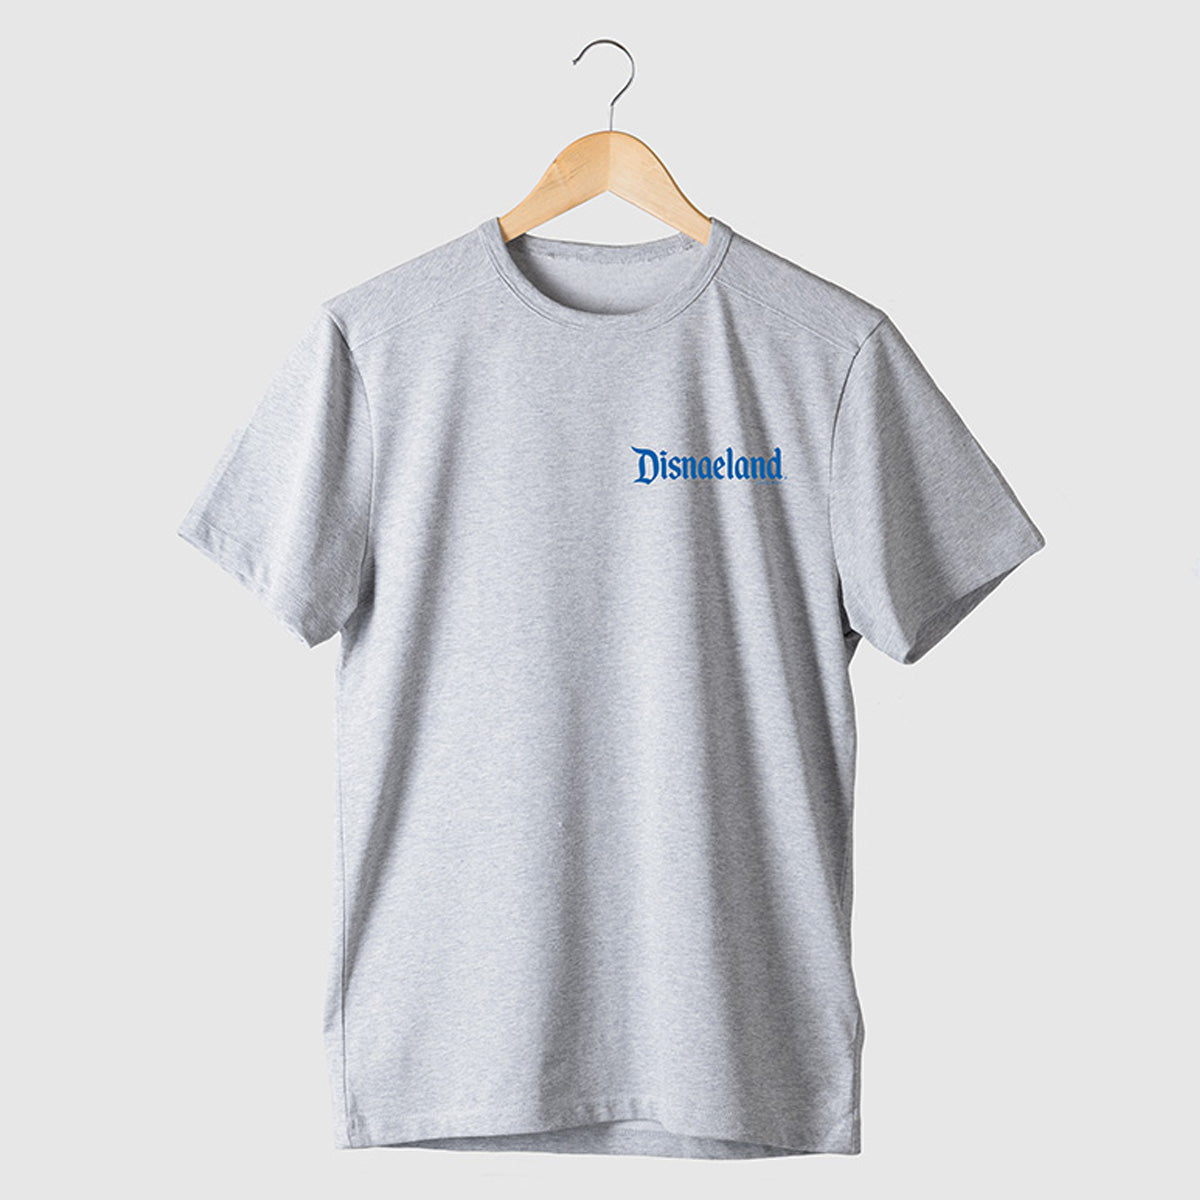 Focus Disnaeland Edinburgh T-shirt - Sport Grey